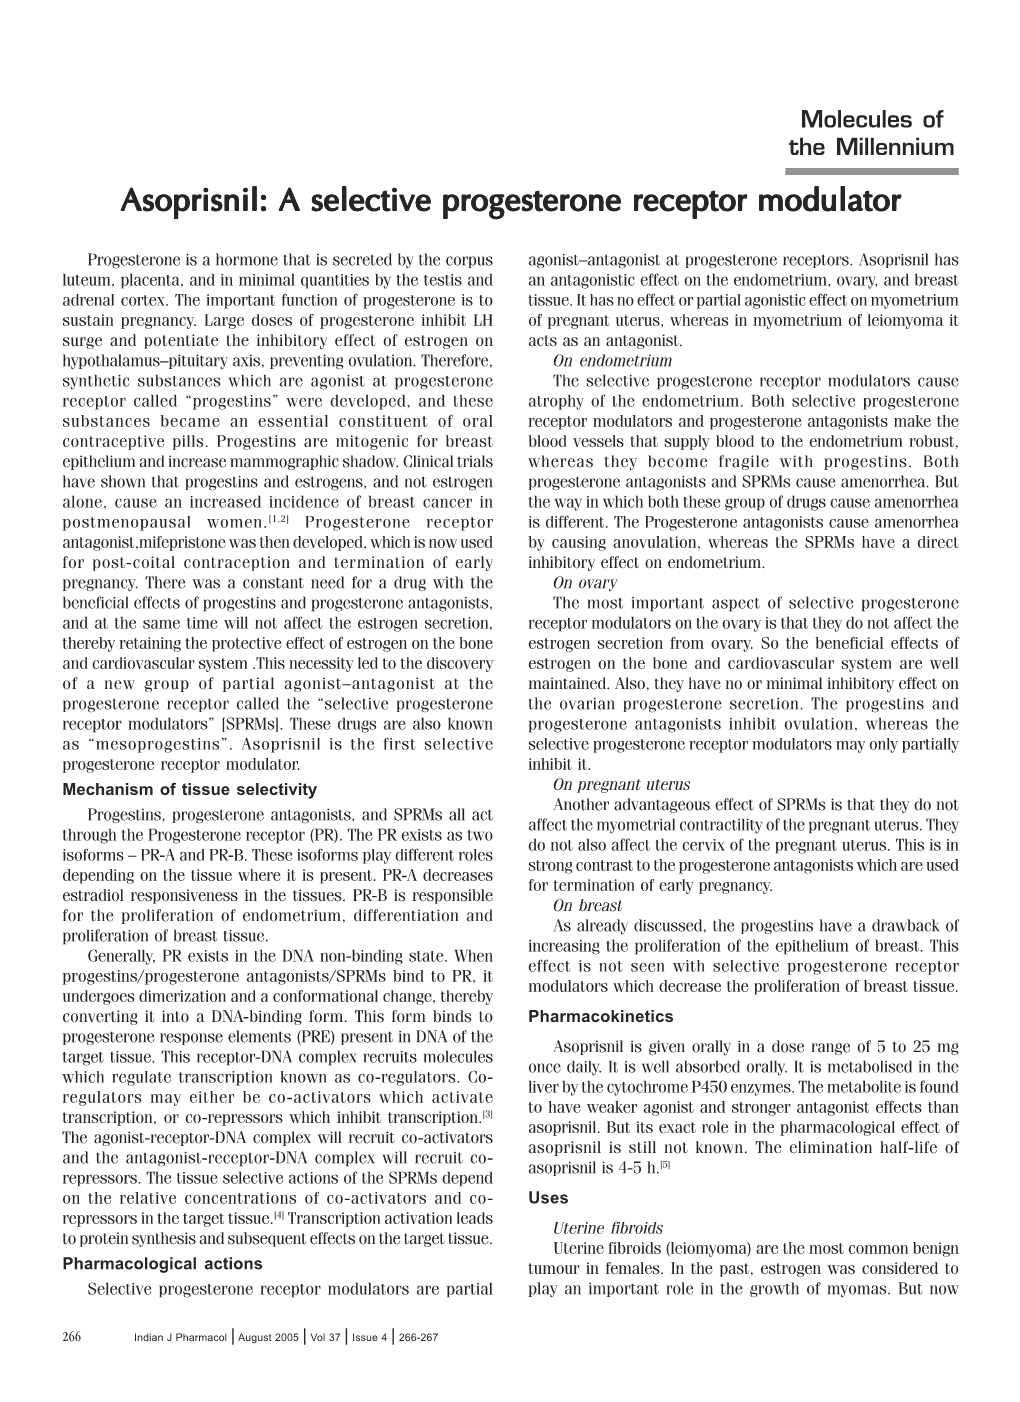 Asoprisnil: a Selective Progesterone Receptor Modulator